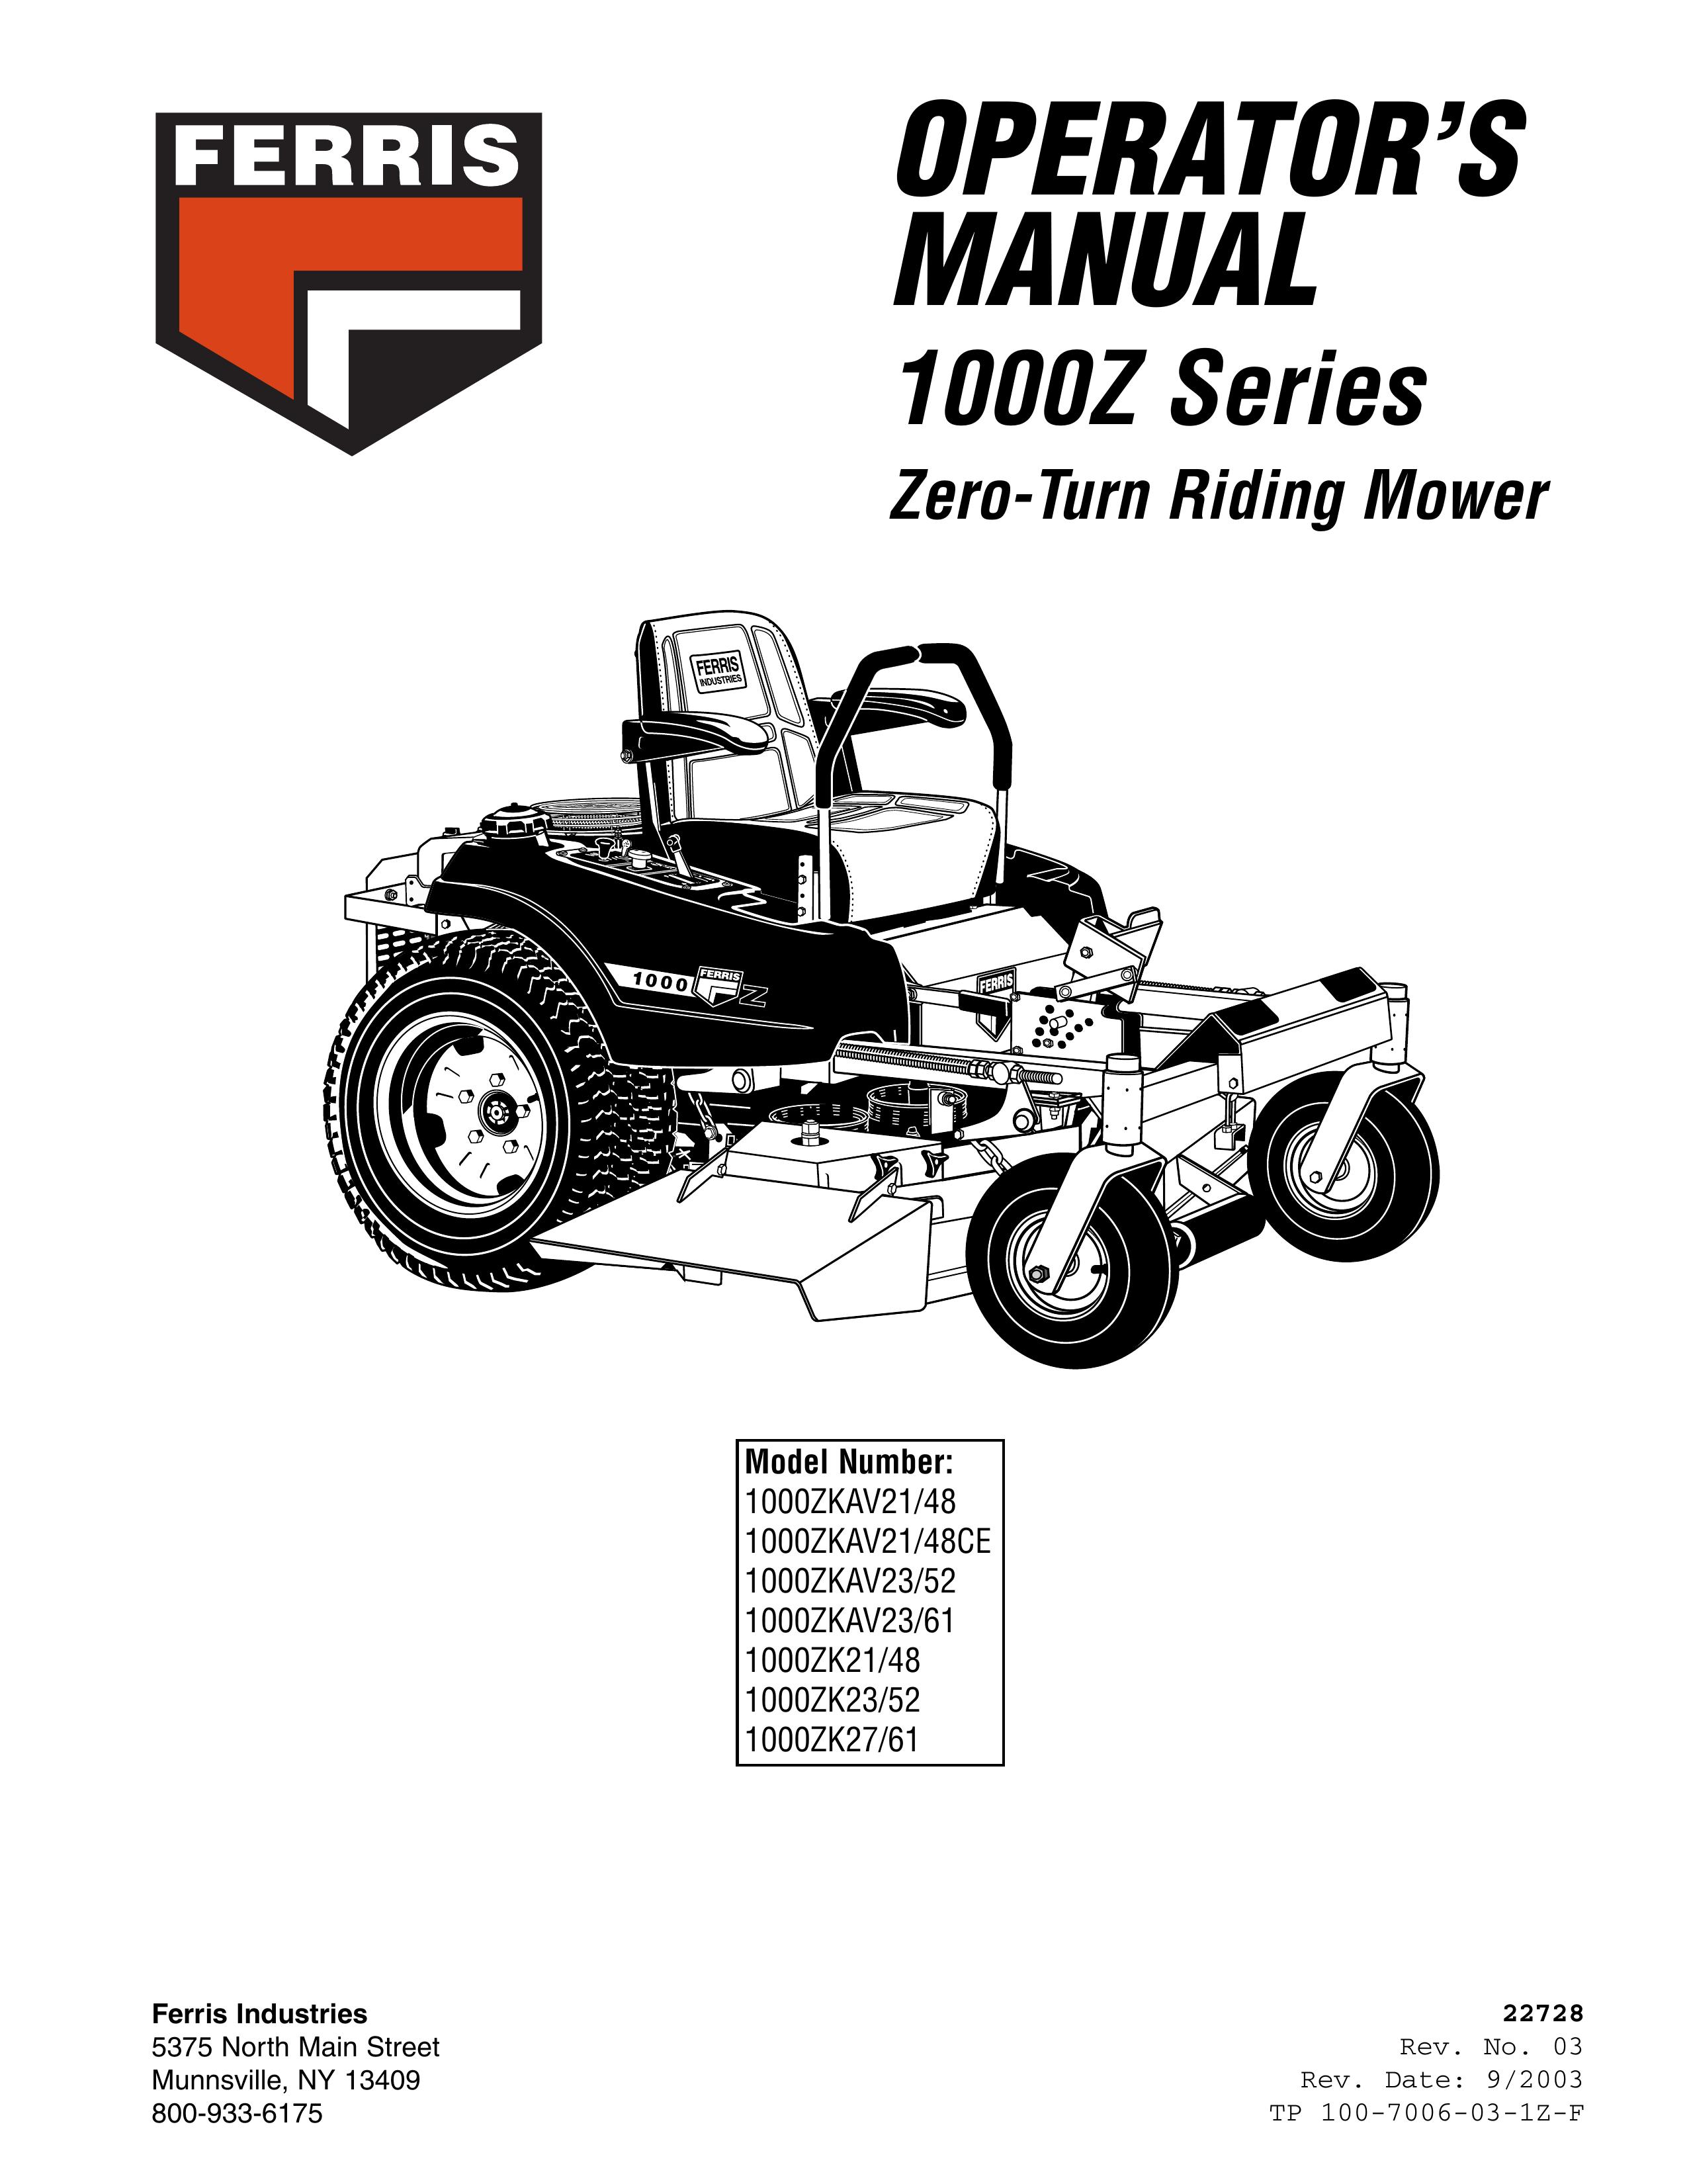 Ferris Industries 1000ZK27/61 Lawn Mower User Manual